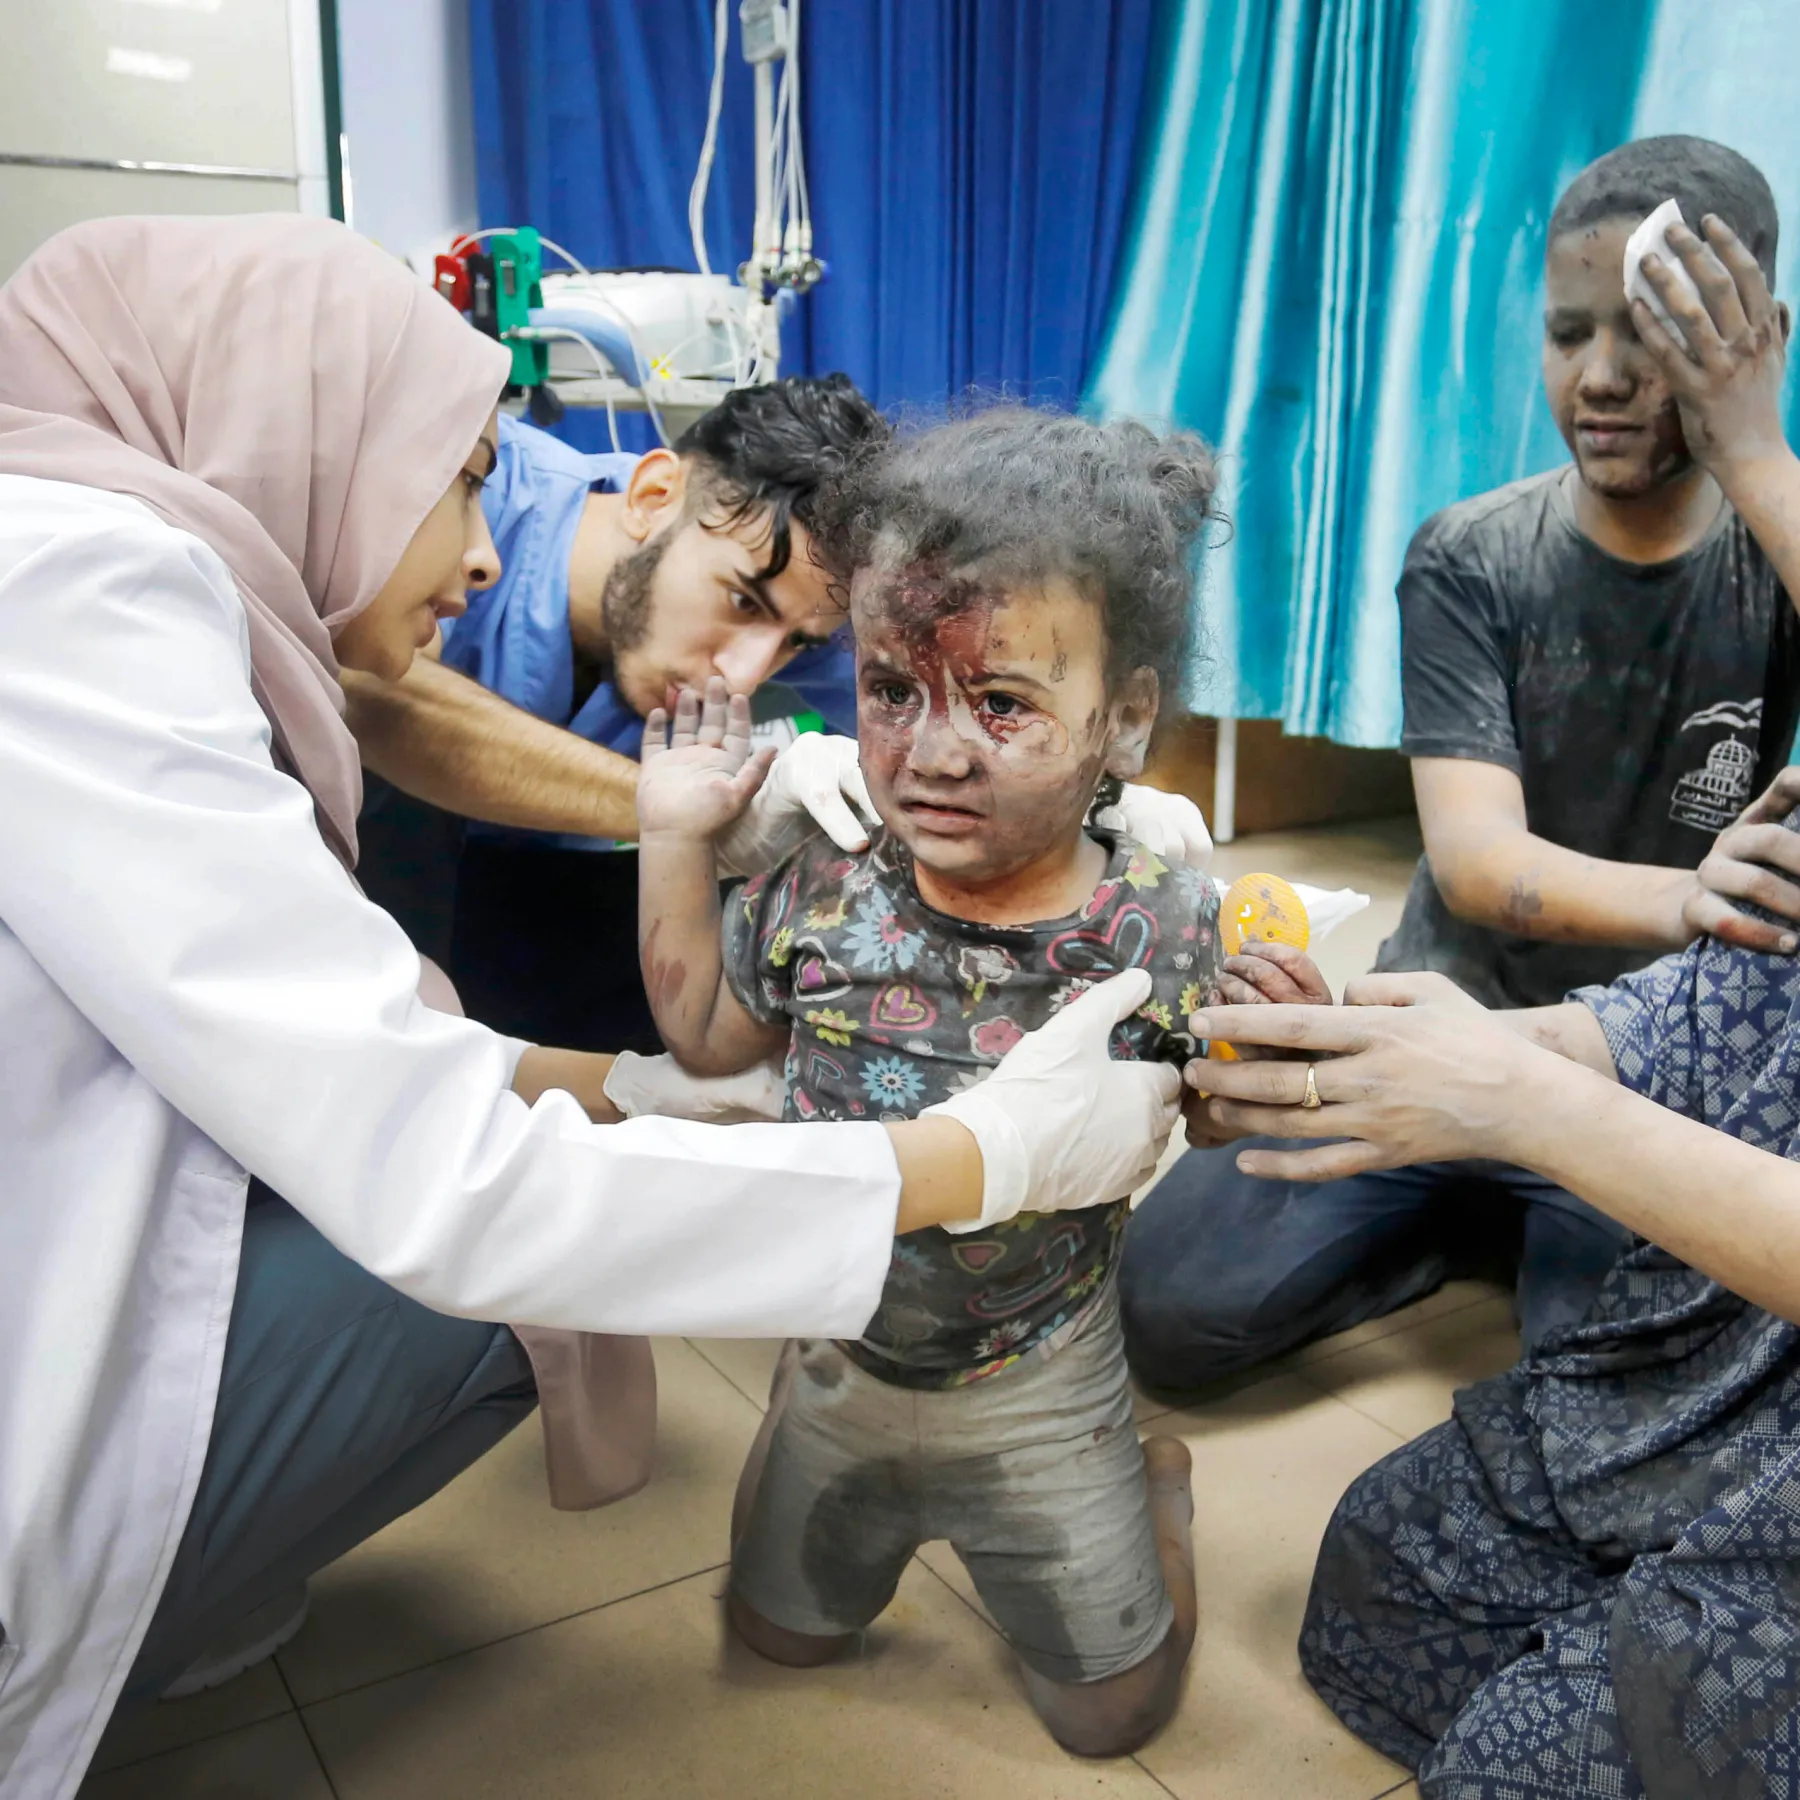 WHO 'Upset' By Gaza Hospital Assault Reports